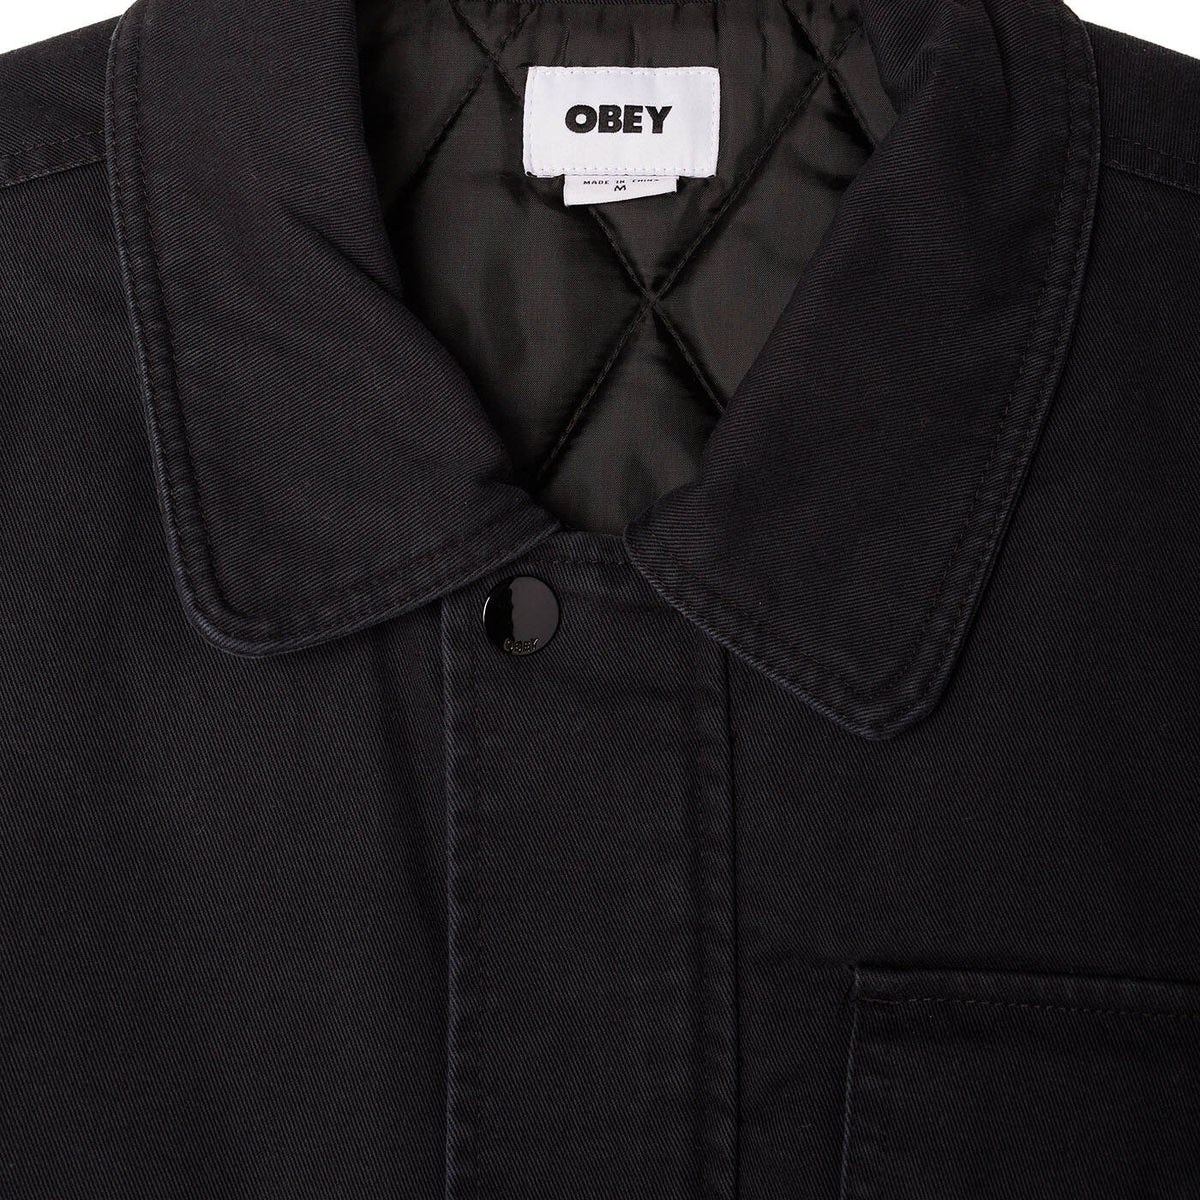 obey charlie jacket